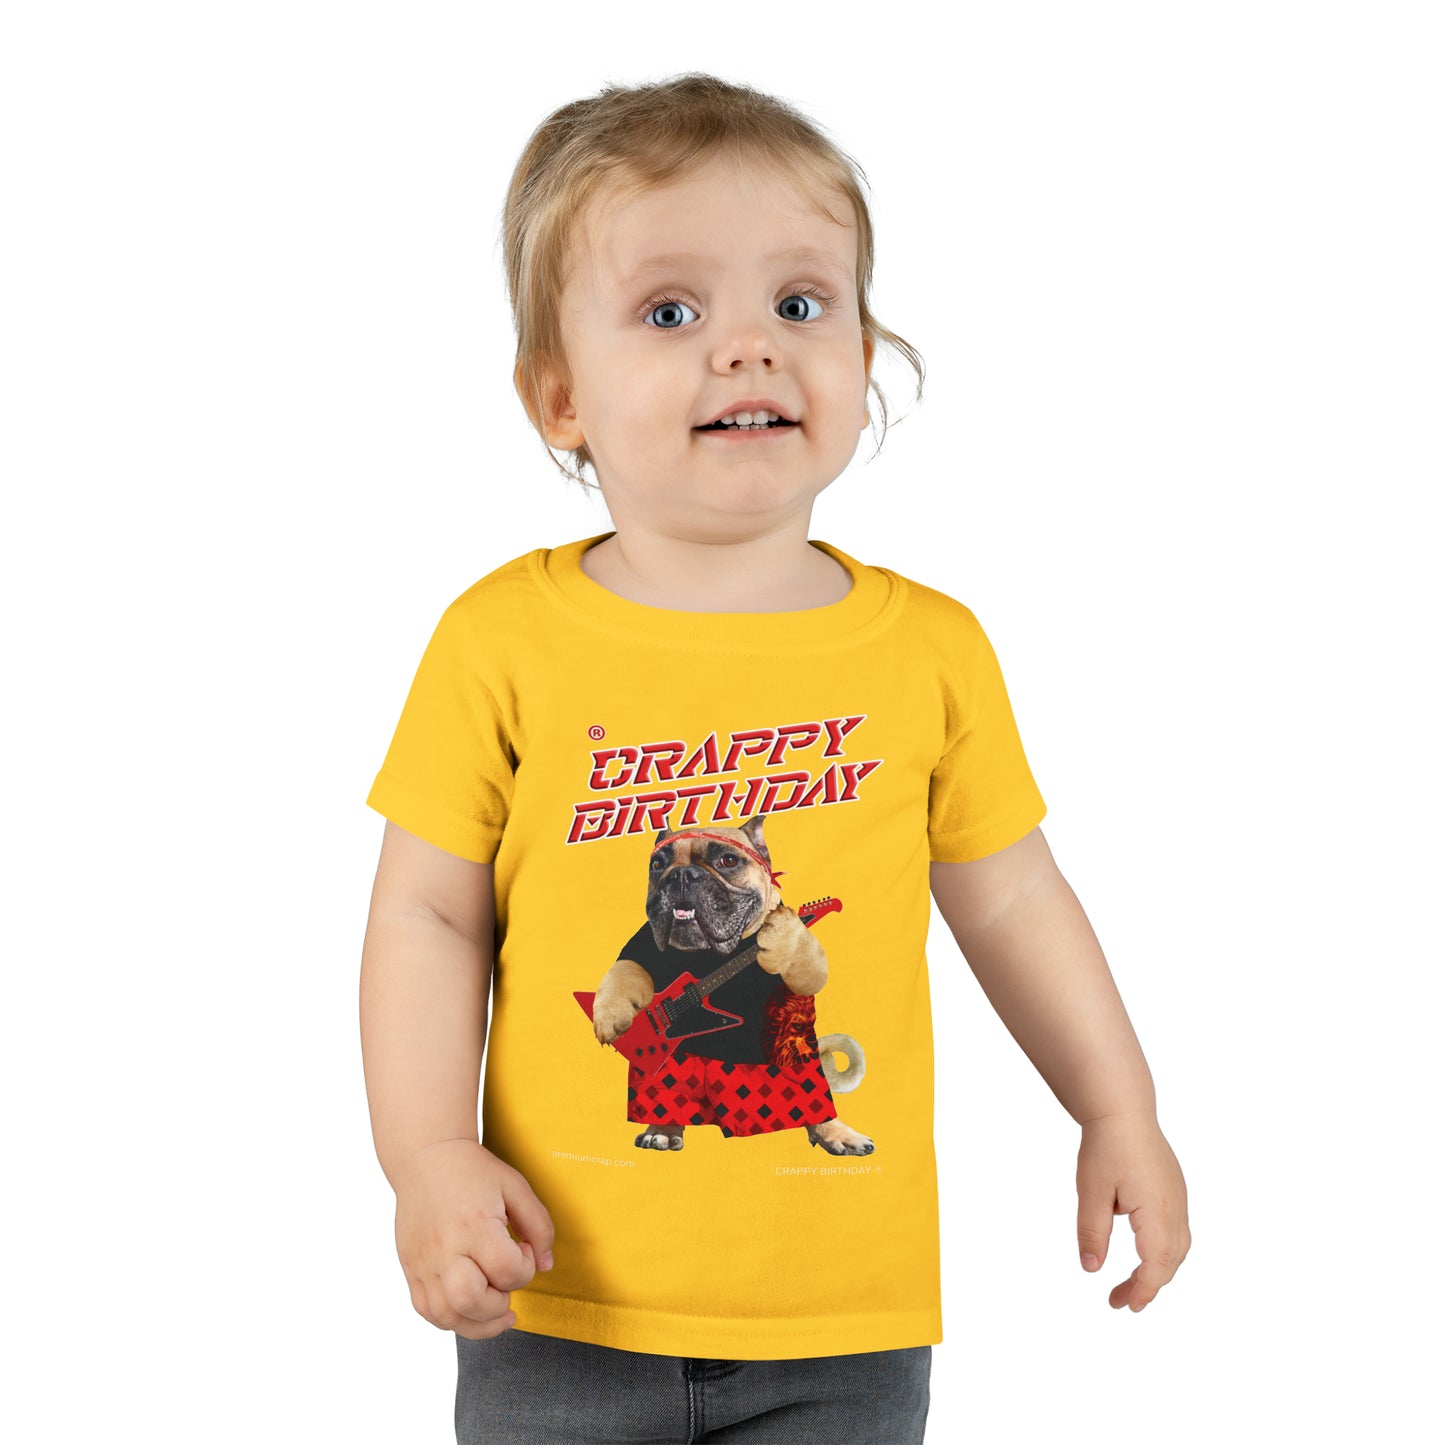 Crappy Birthday II Toddler T-shirt